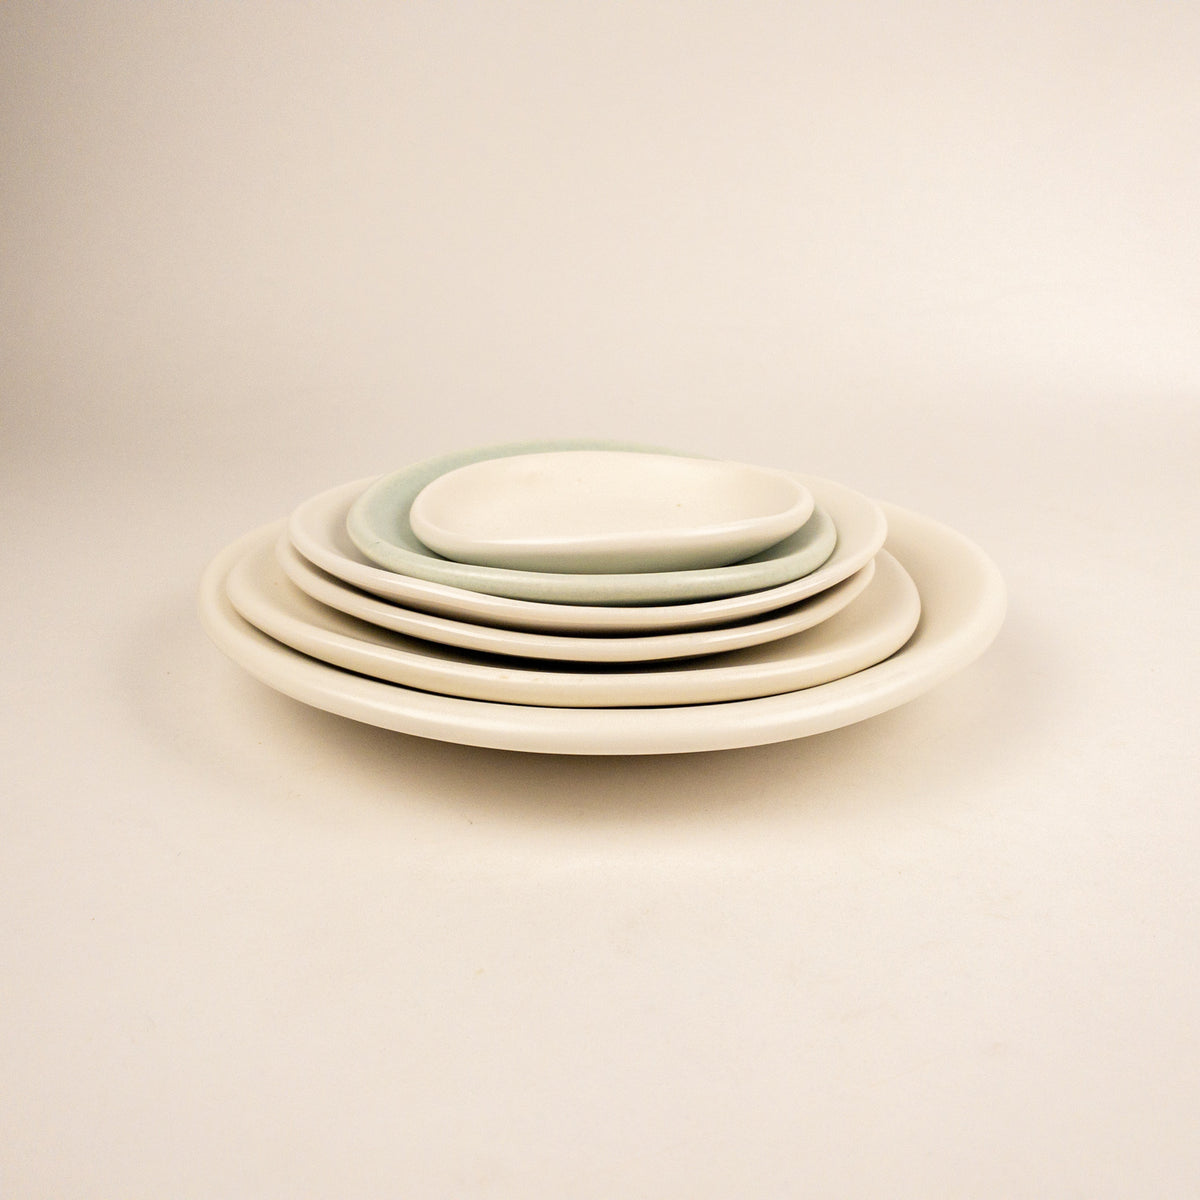 <!--3500--!>Tableware - Delicate Dish